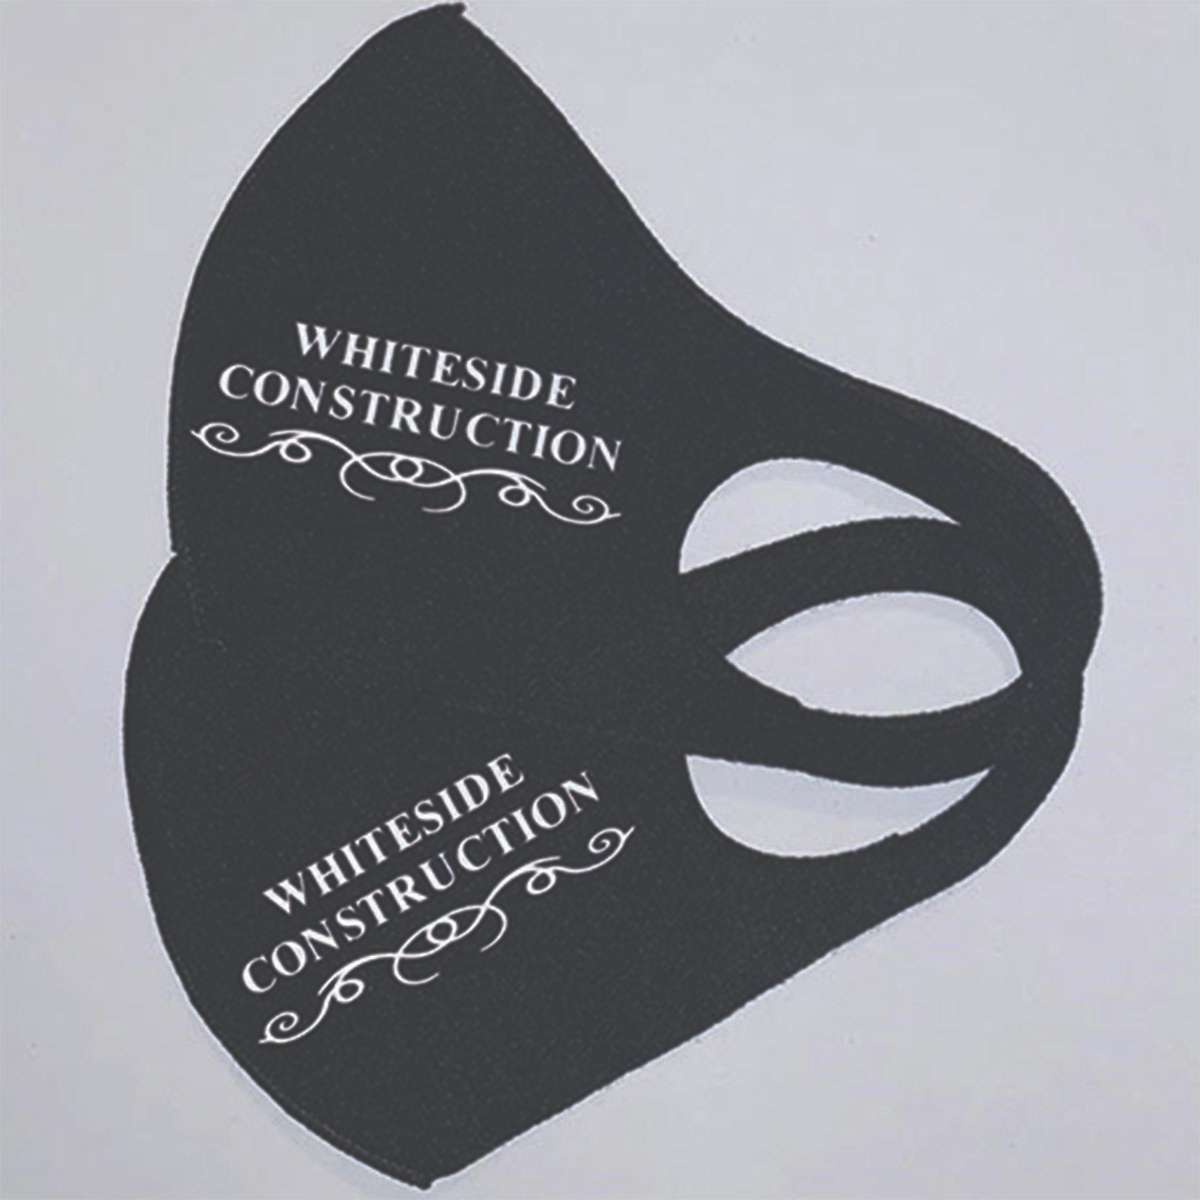 whiteside construction mask printing service